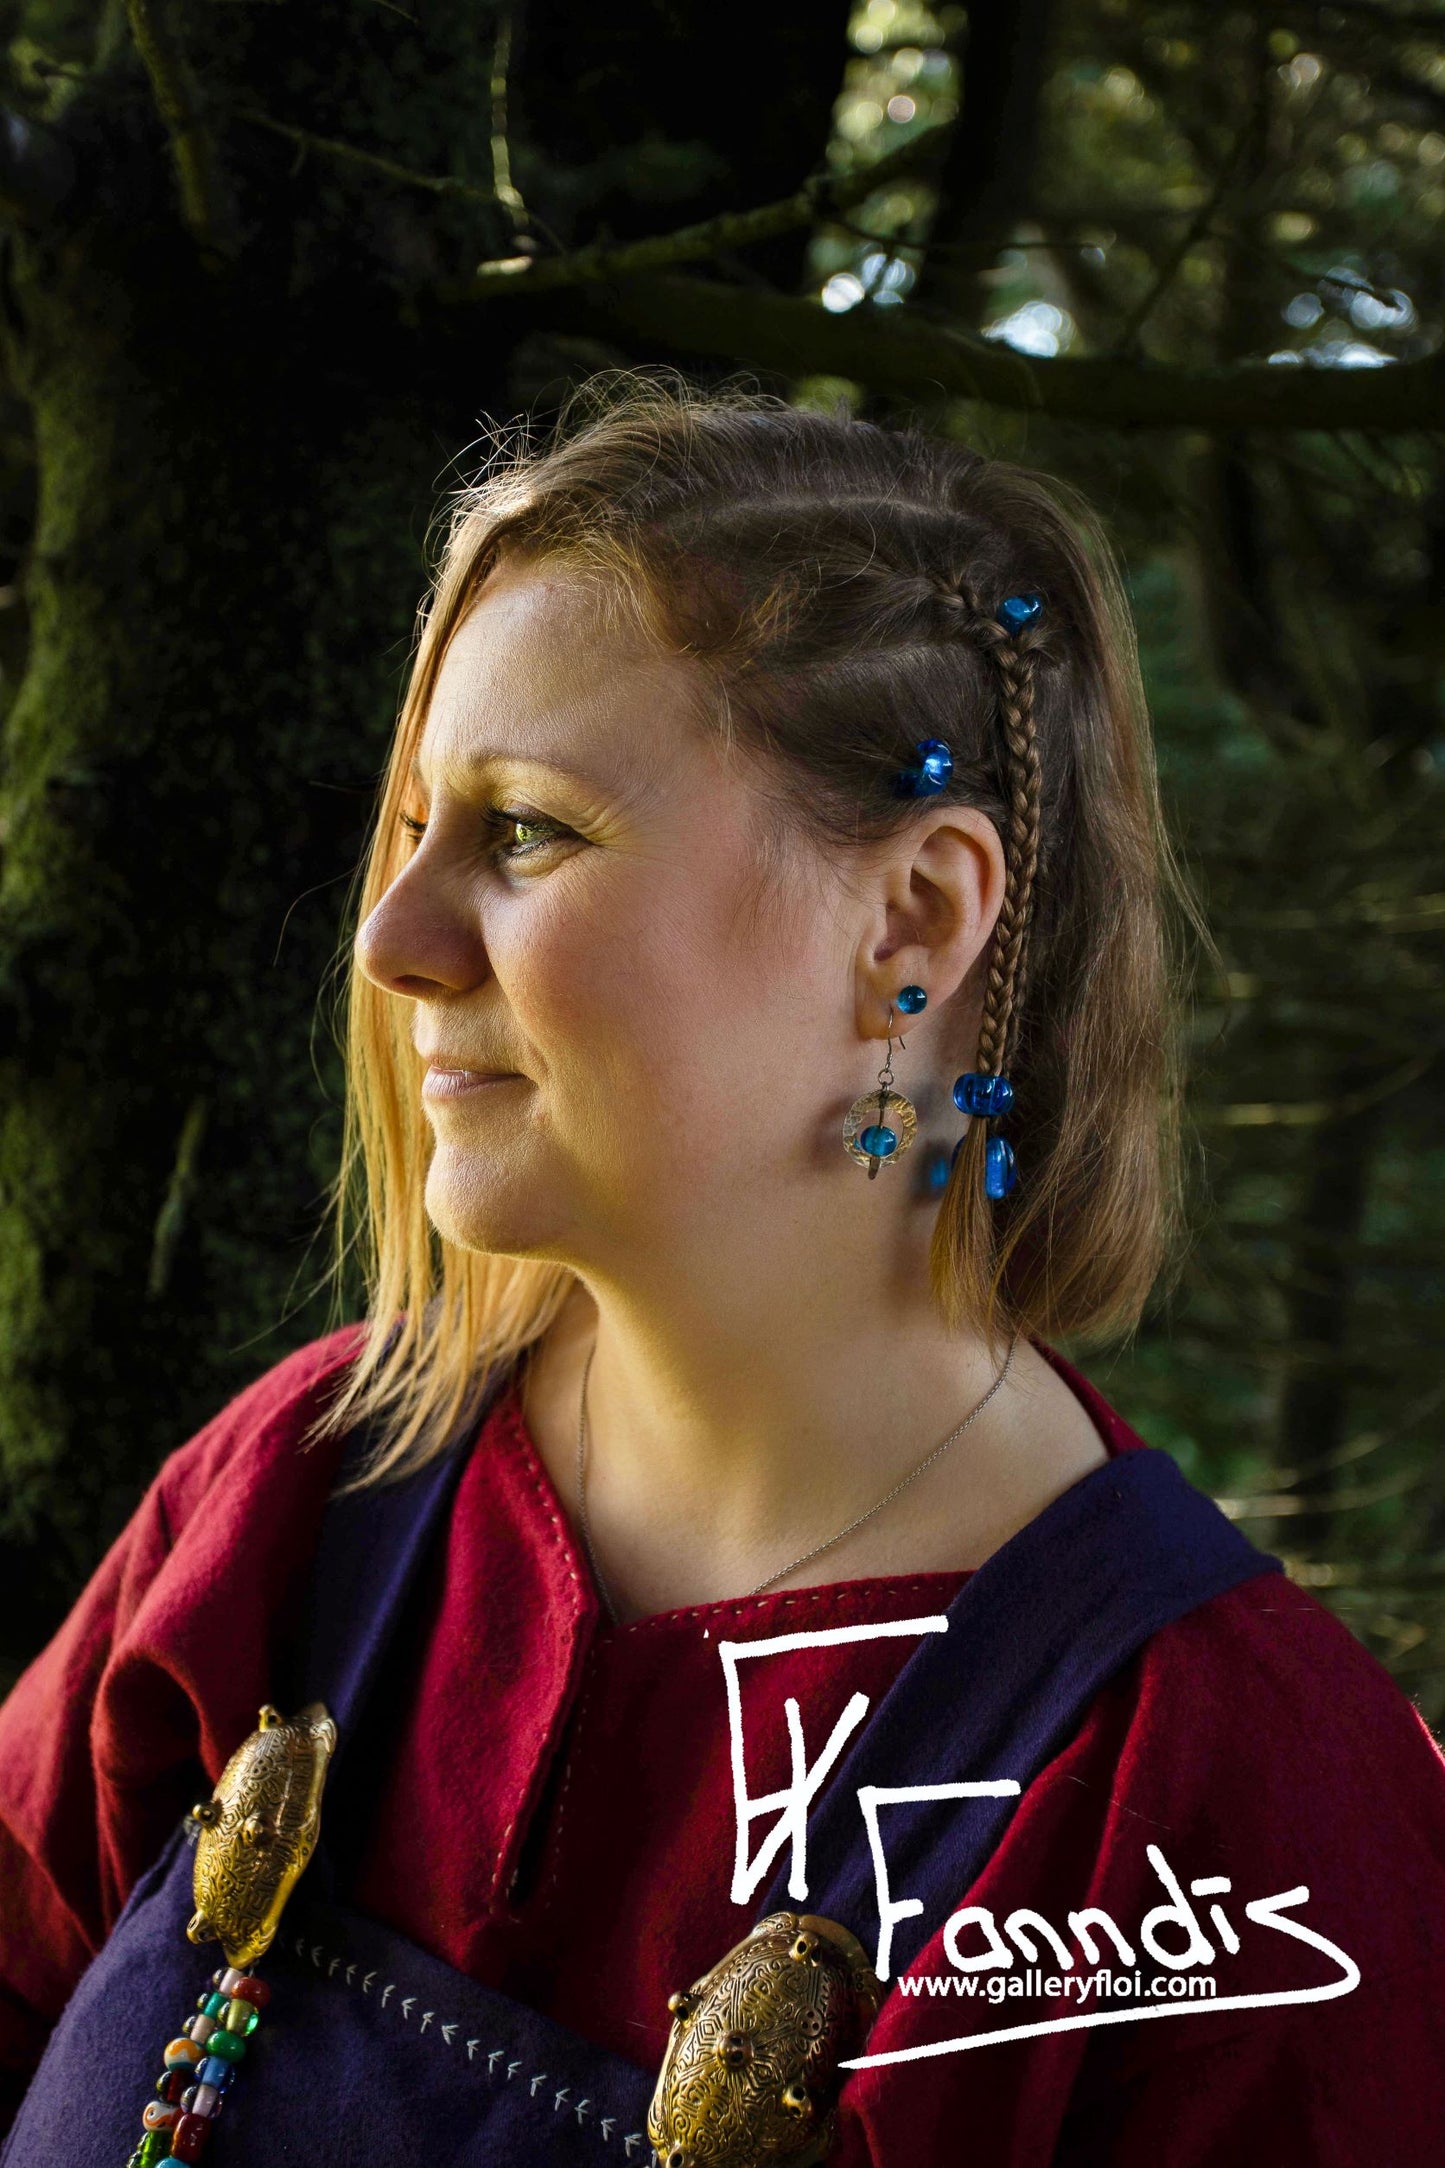 Víkinga glerperlu hárskraut rósa kvart/ Viking glass bead hair accessories Rose Quarts